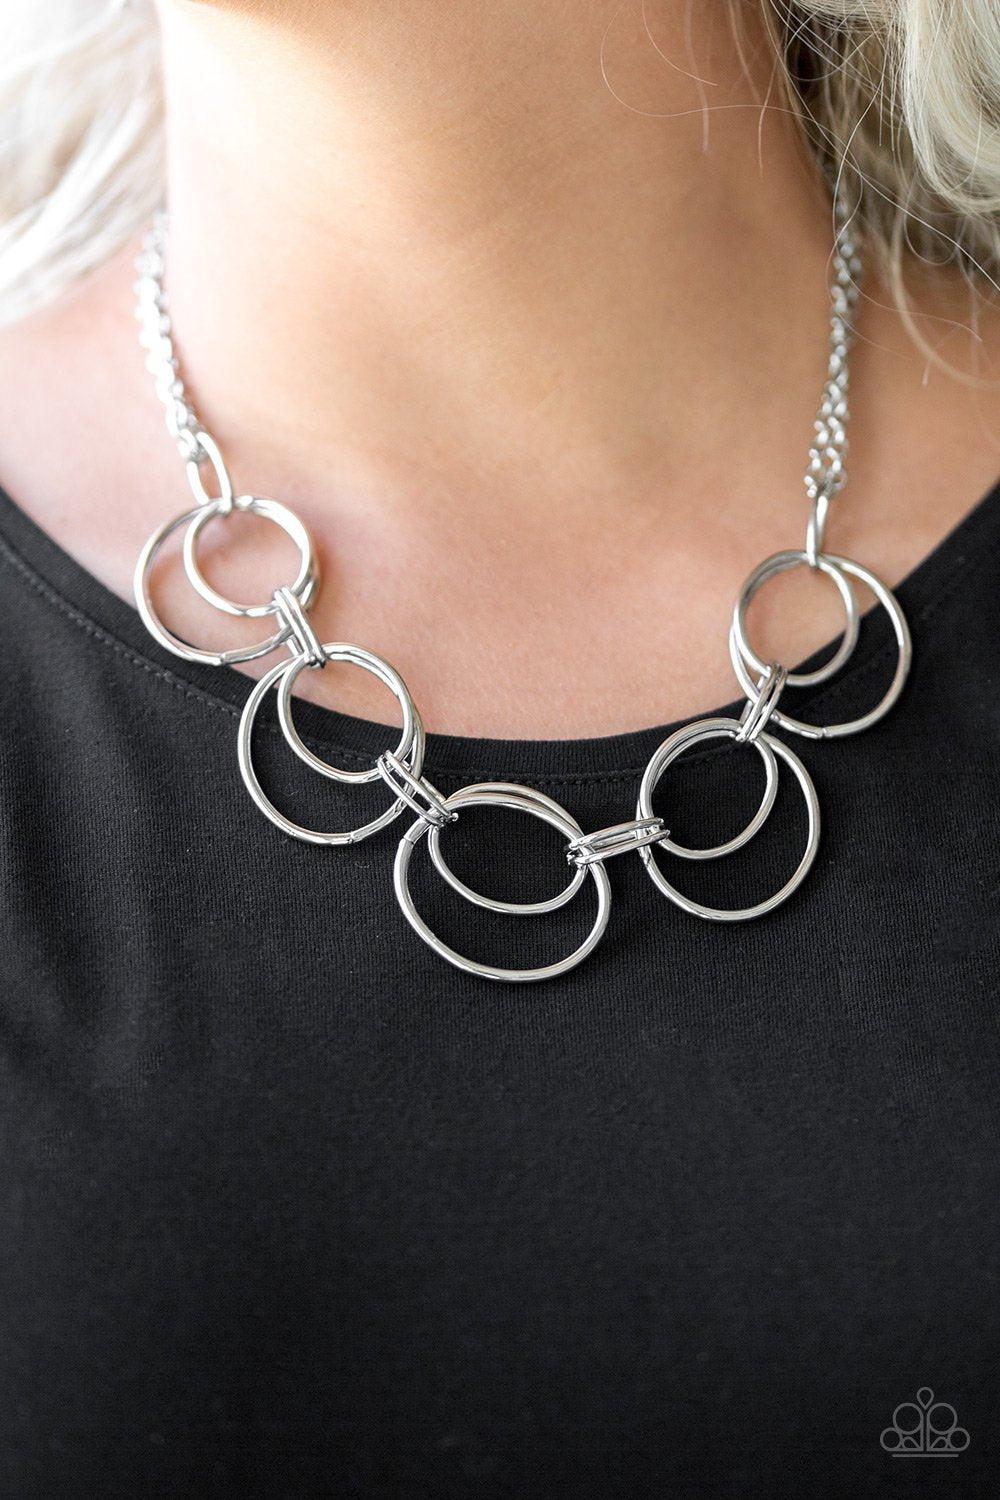 Urban Orbit Silver Necklace - Paparazzi Accessories - model -CarasShop.com - $5 Jewelry by Cara Jewels